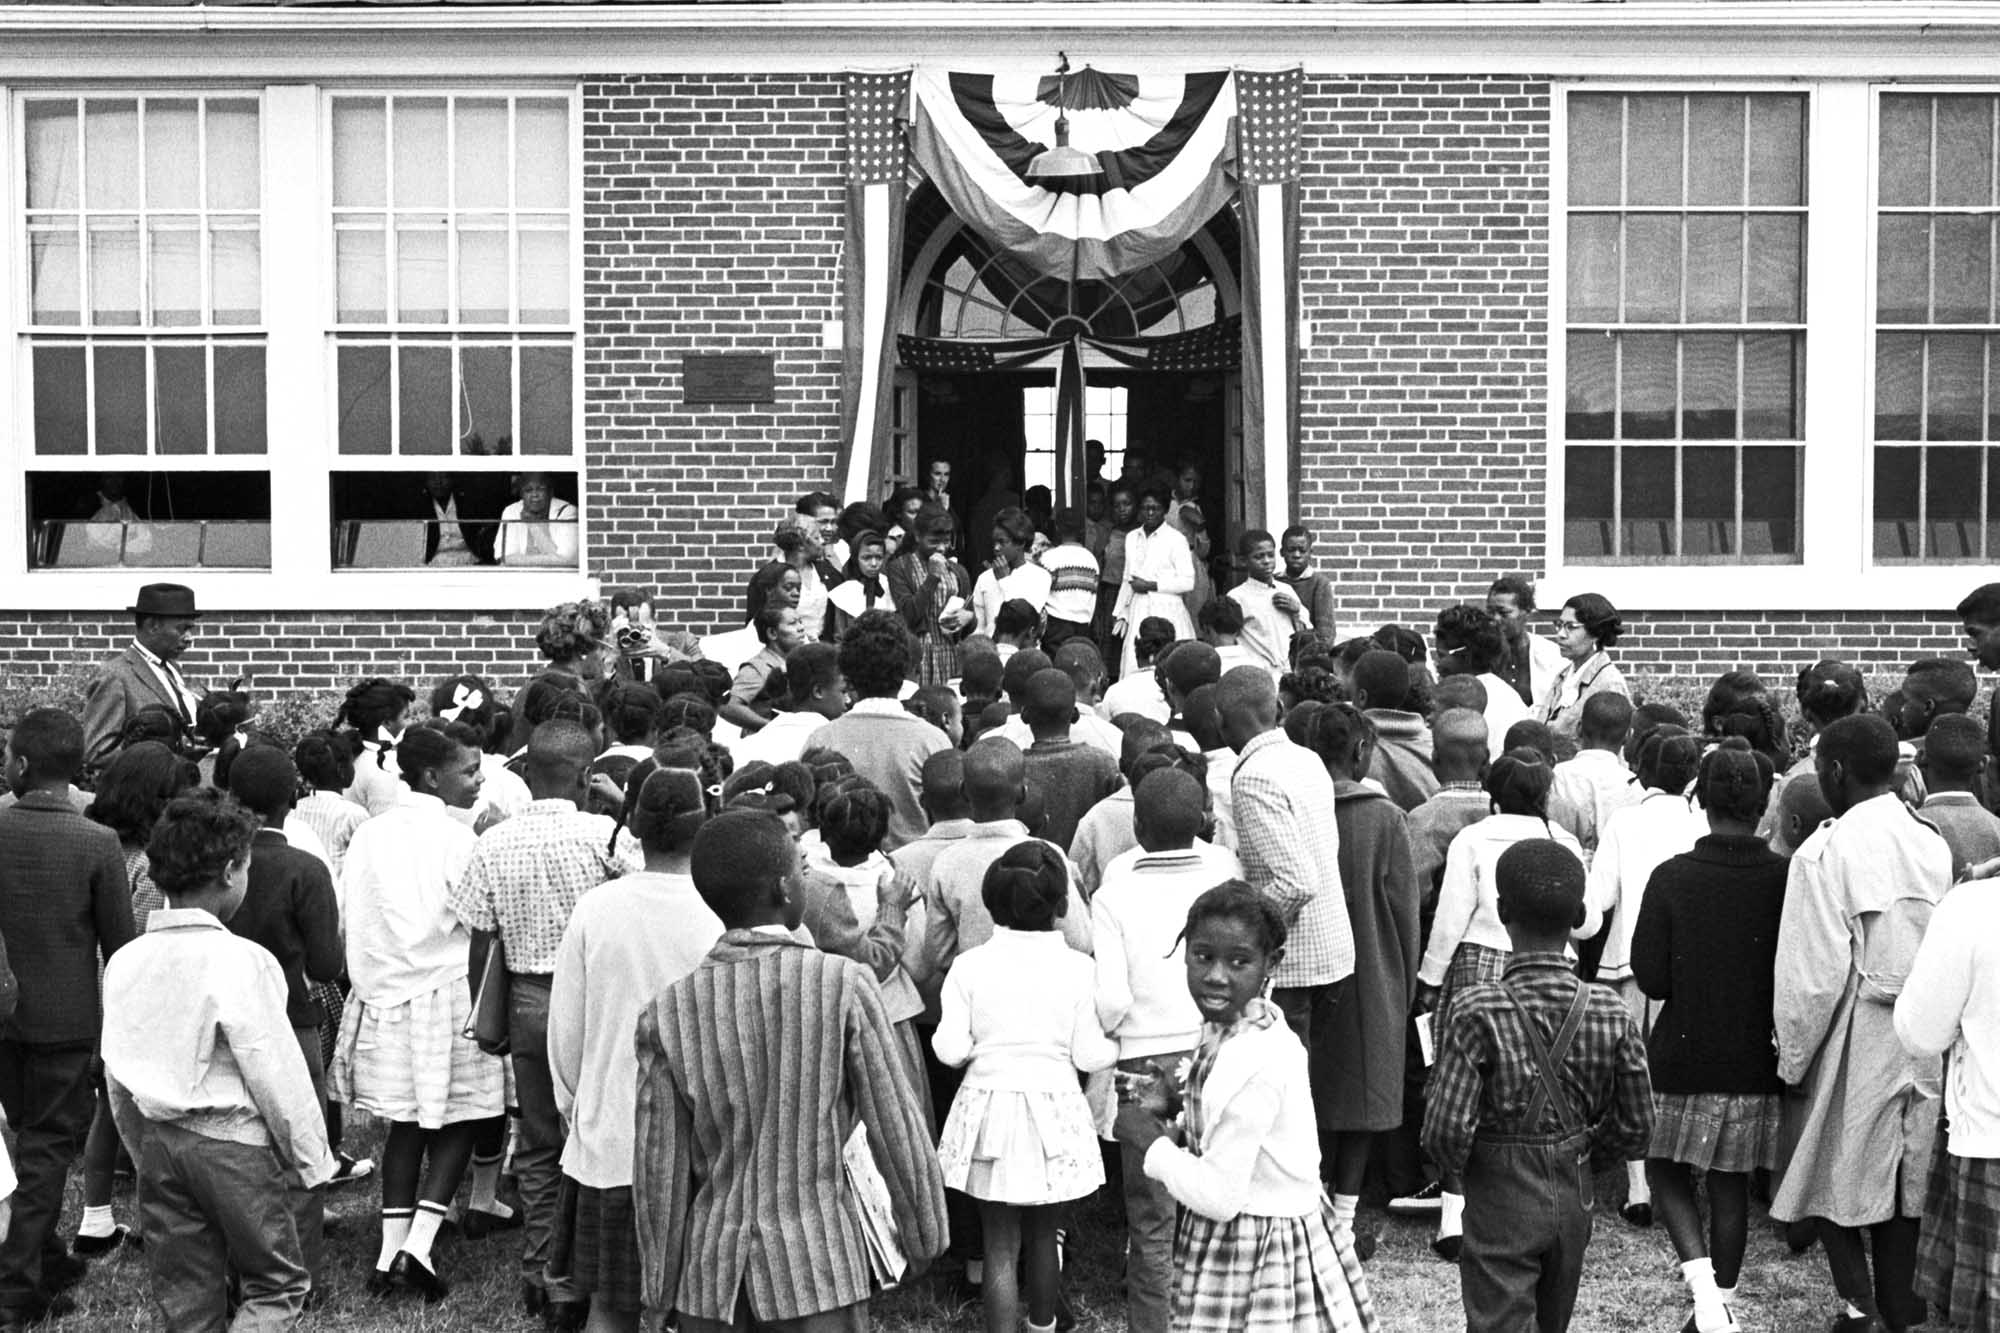 Brick school building with African American children walking into the school building